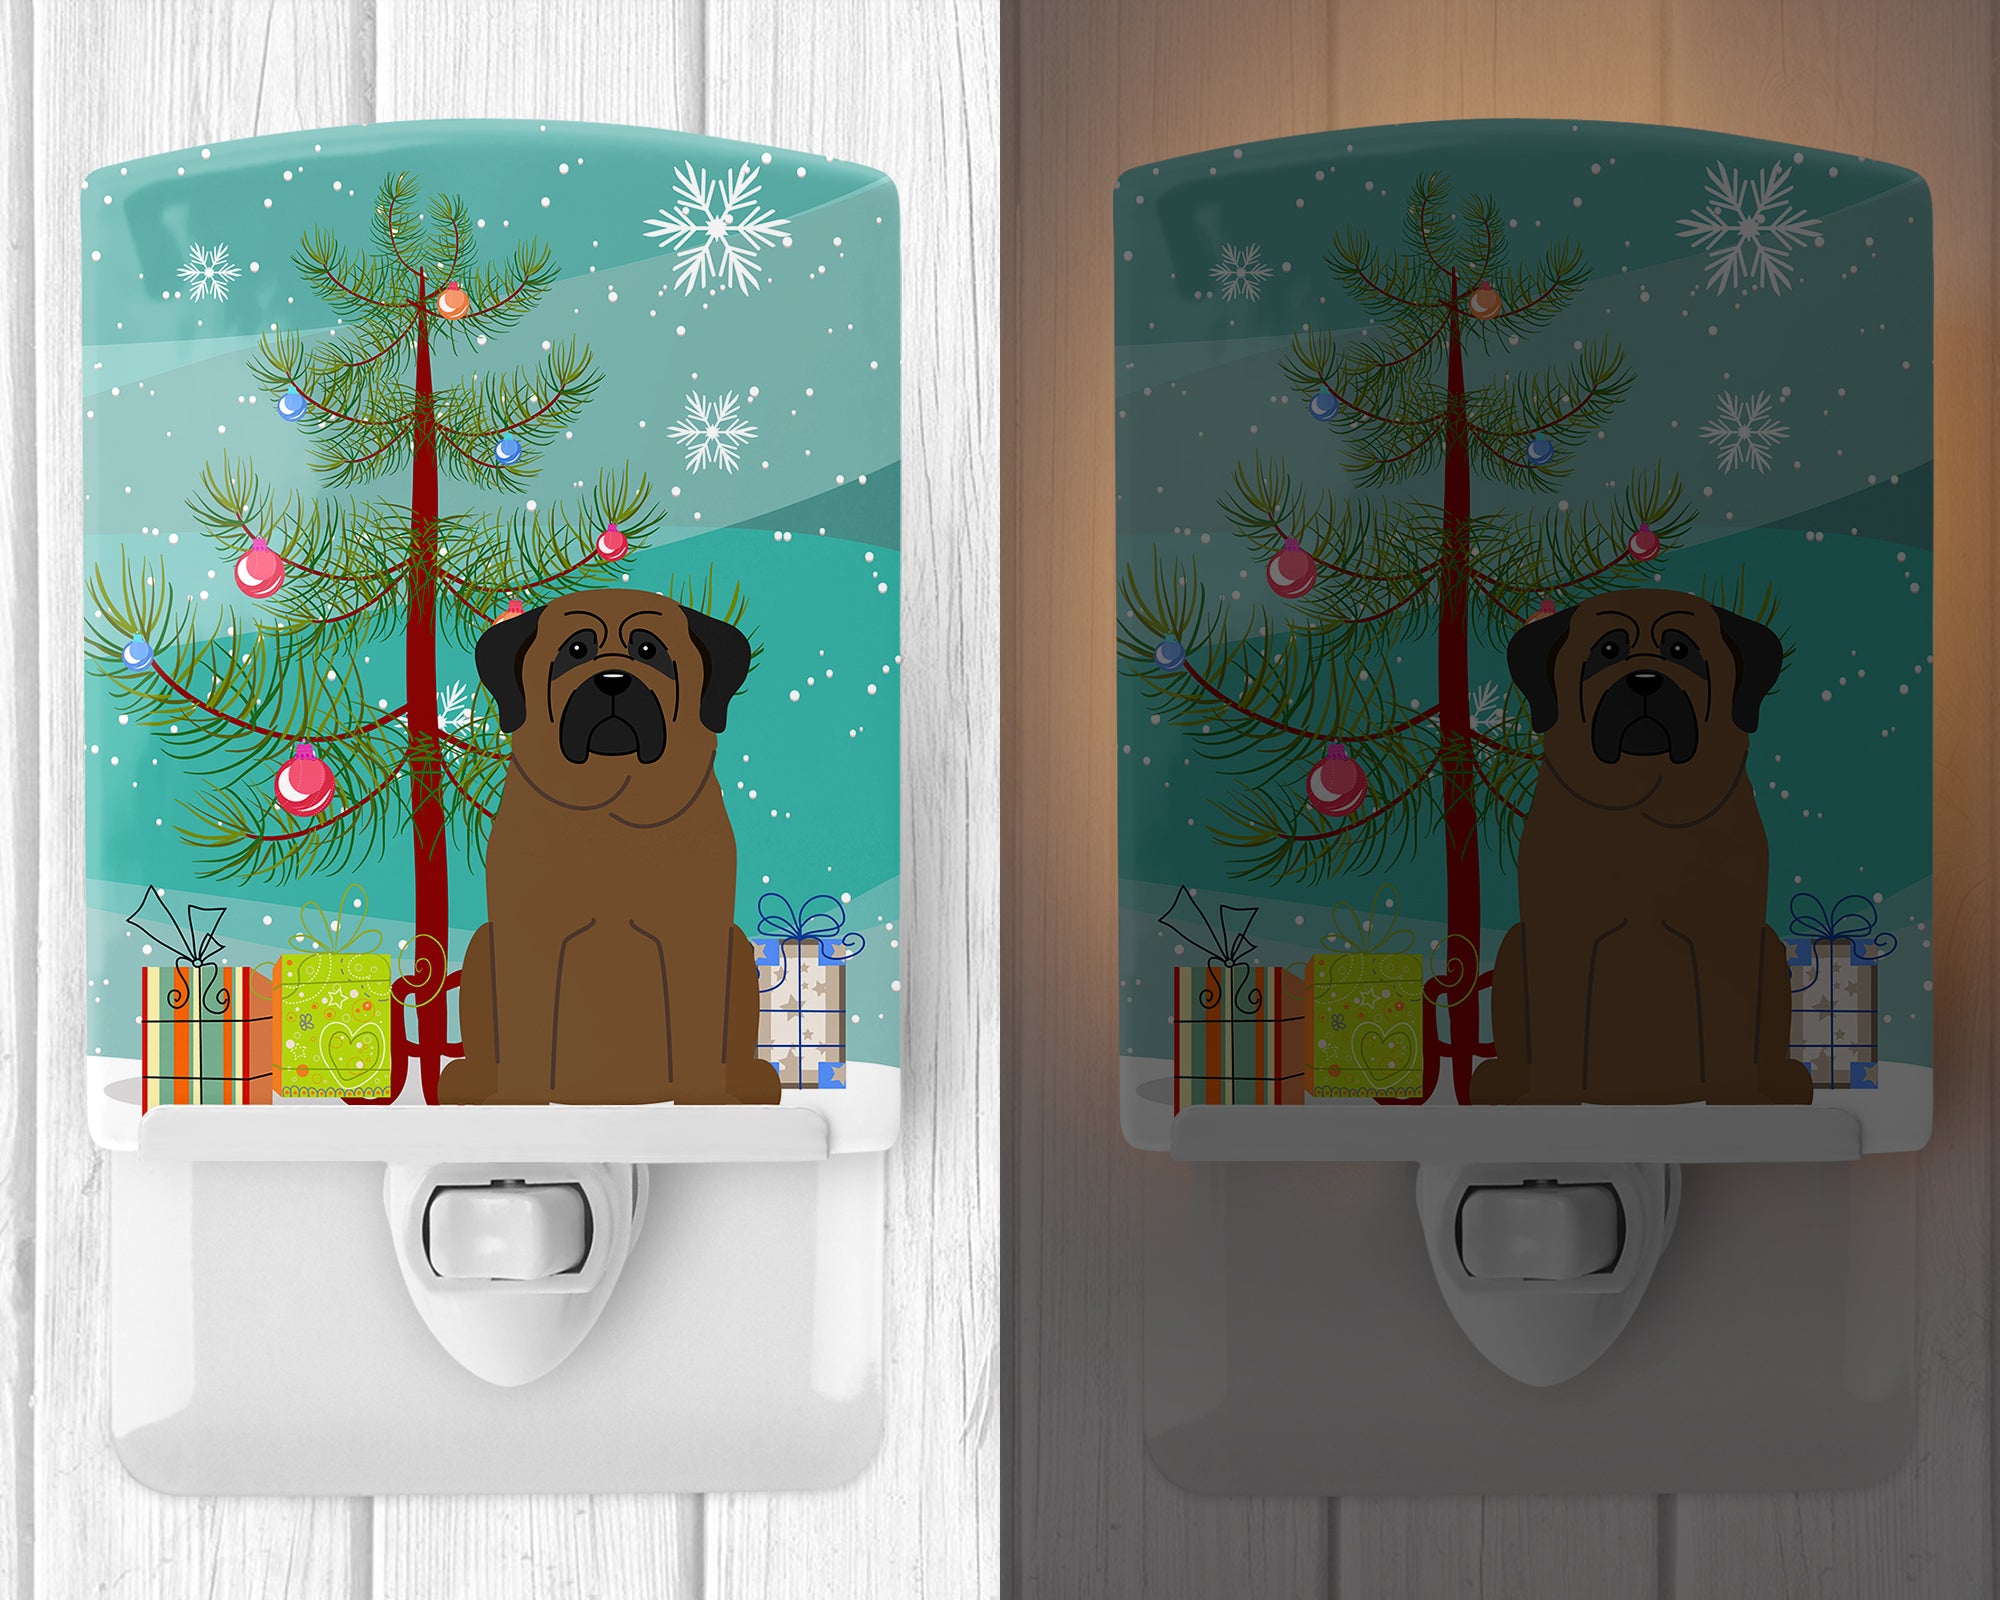 Merry Christmas Tree Bullmastiff Ceramic Night Light BB4209CNL - the-store.com